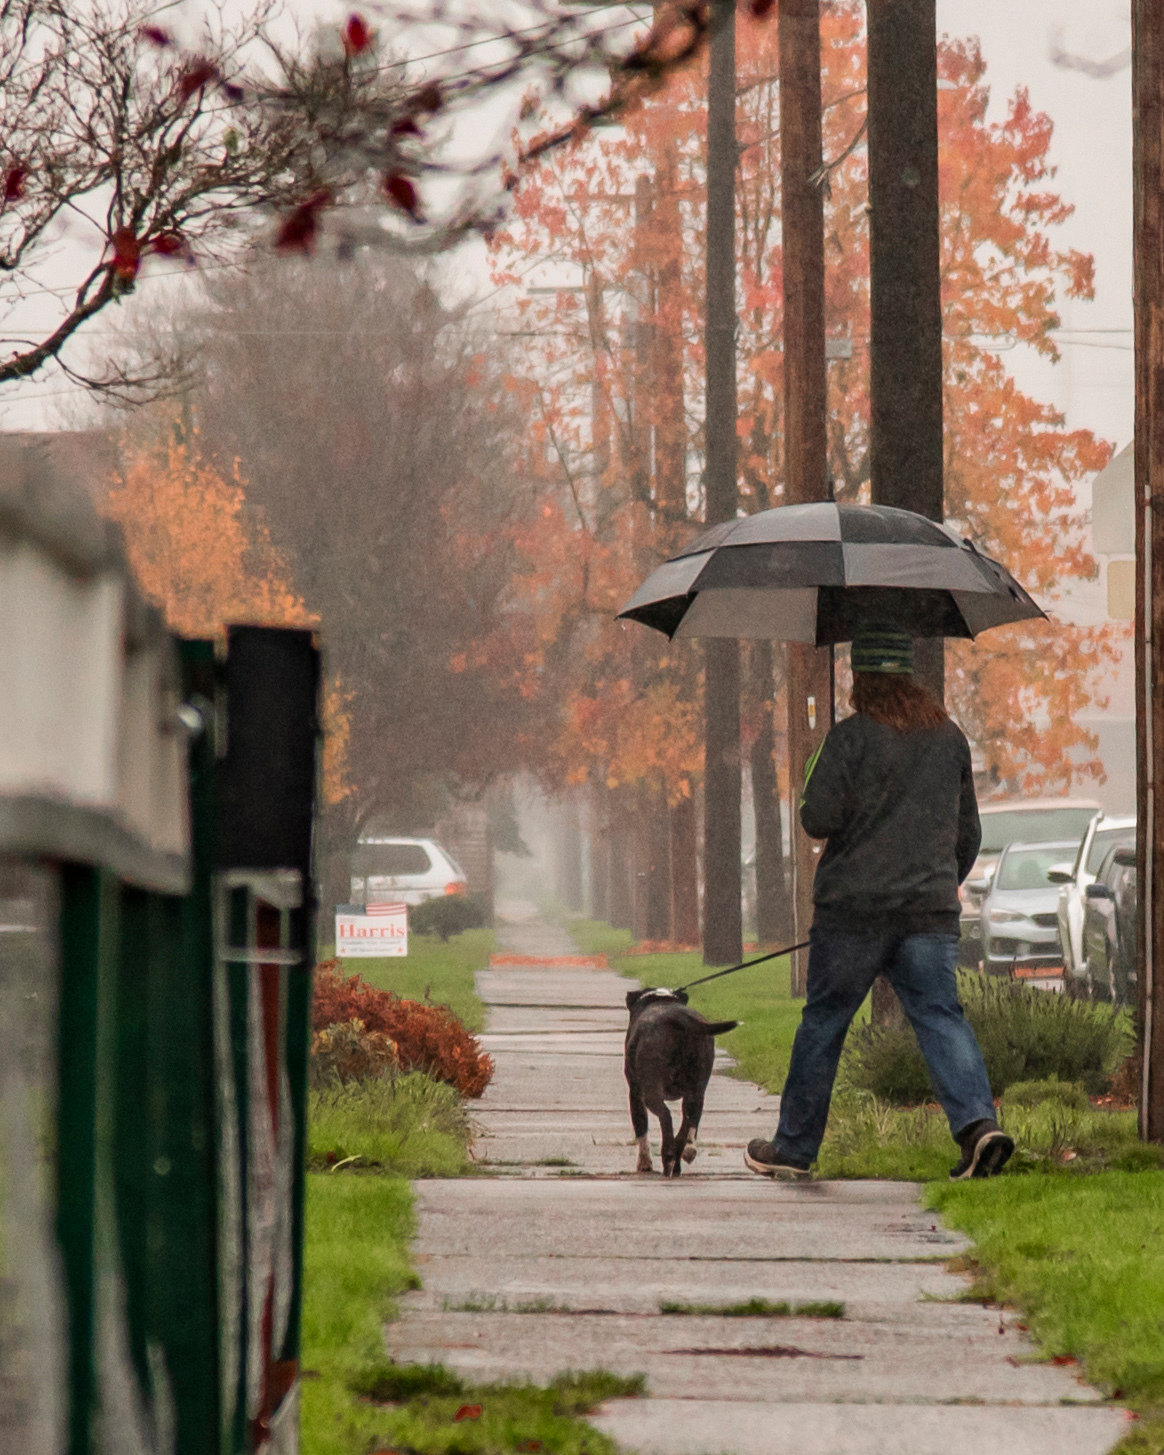 A man and his dog walk under an umbrella in Chehalis on Friday as rain falls.